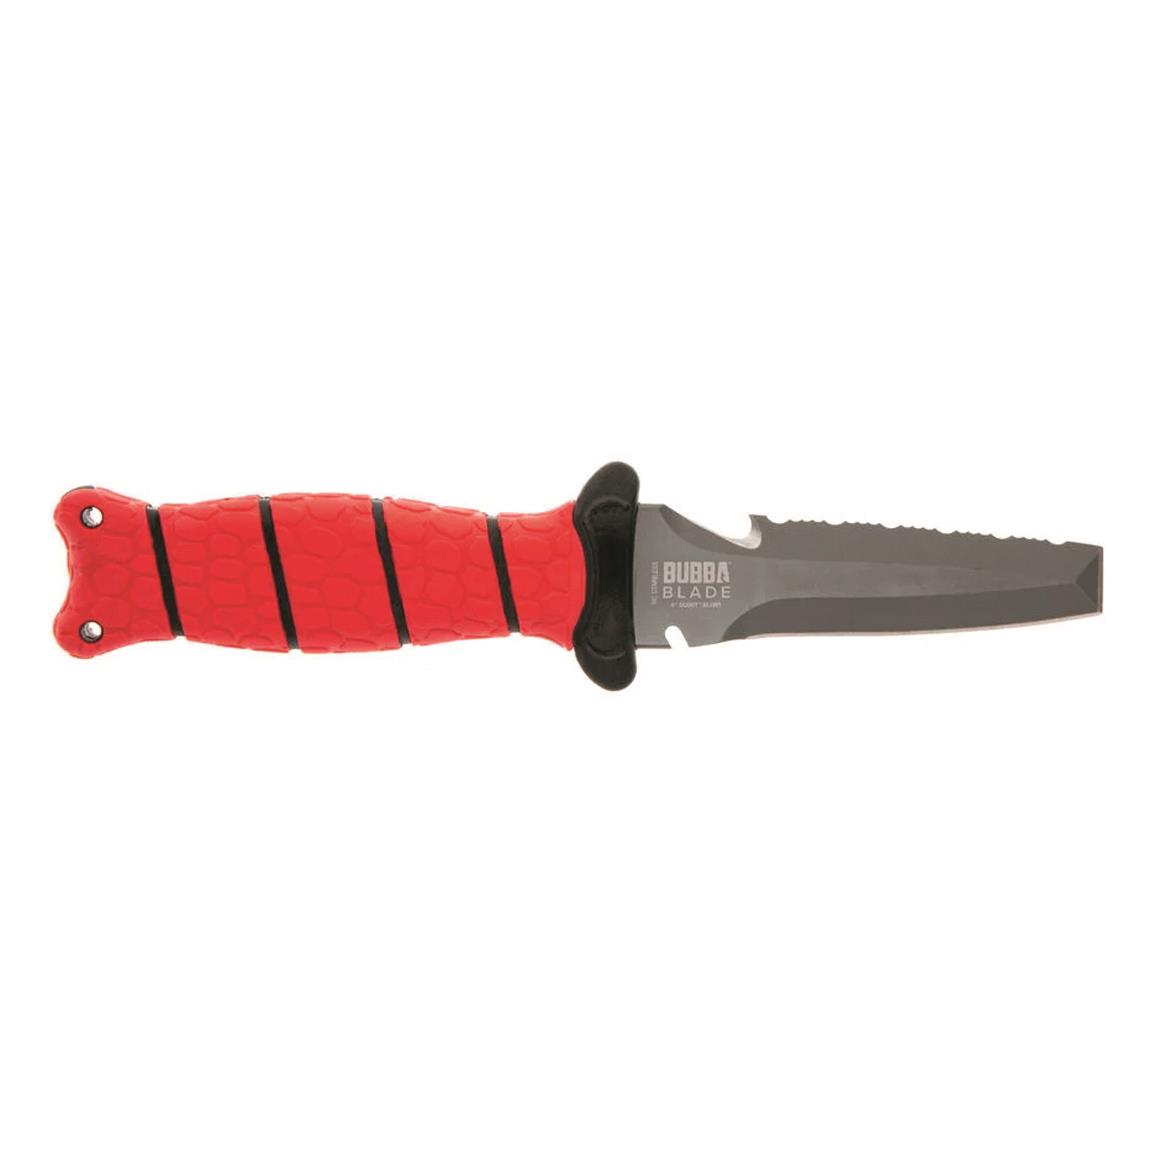 4" blunted dagger blade with titanium-nitride coating